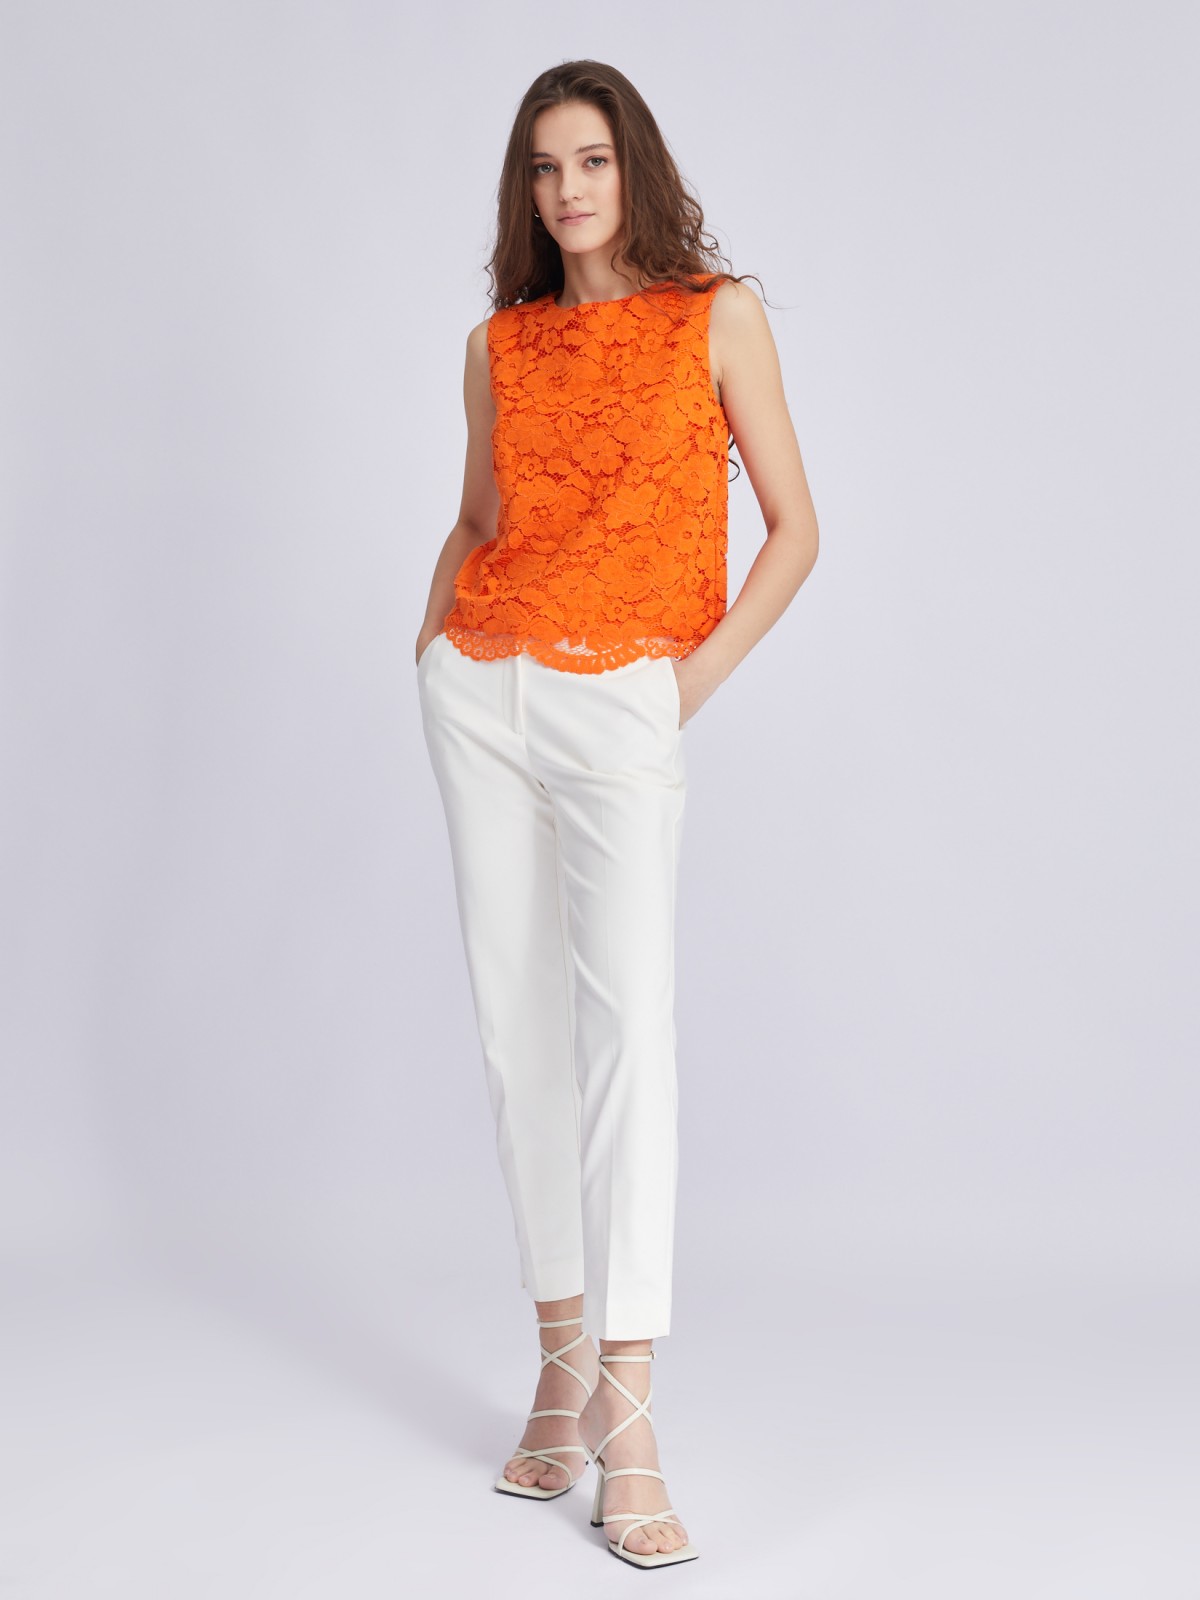 Кружевной топ-блузка без рукавов zolla 02324132L053, цвет оранжевый, размер XS - фото 2